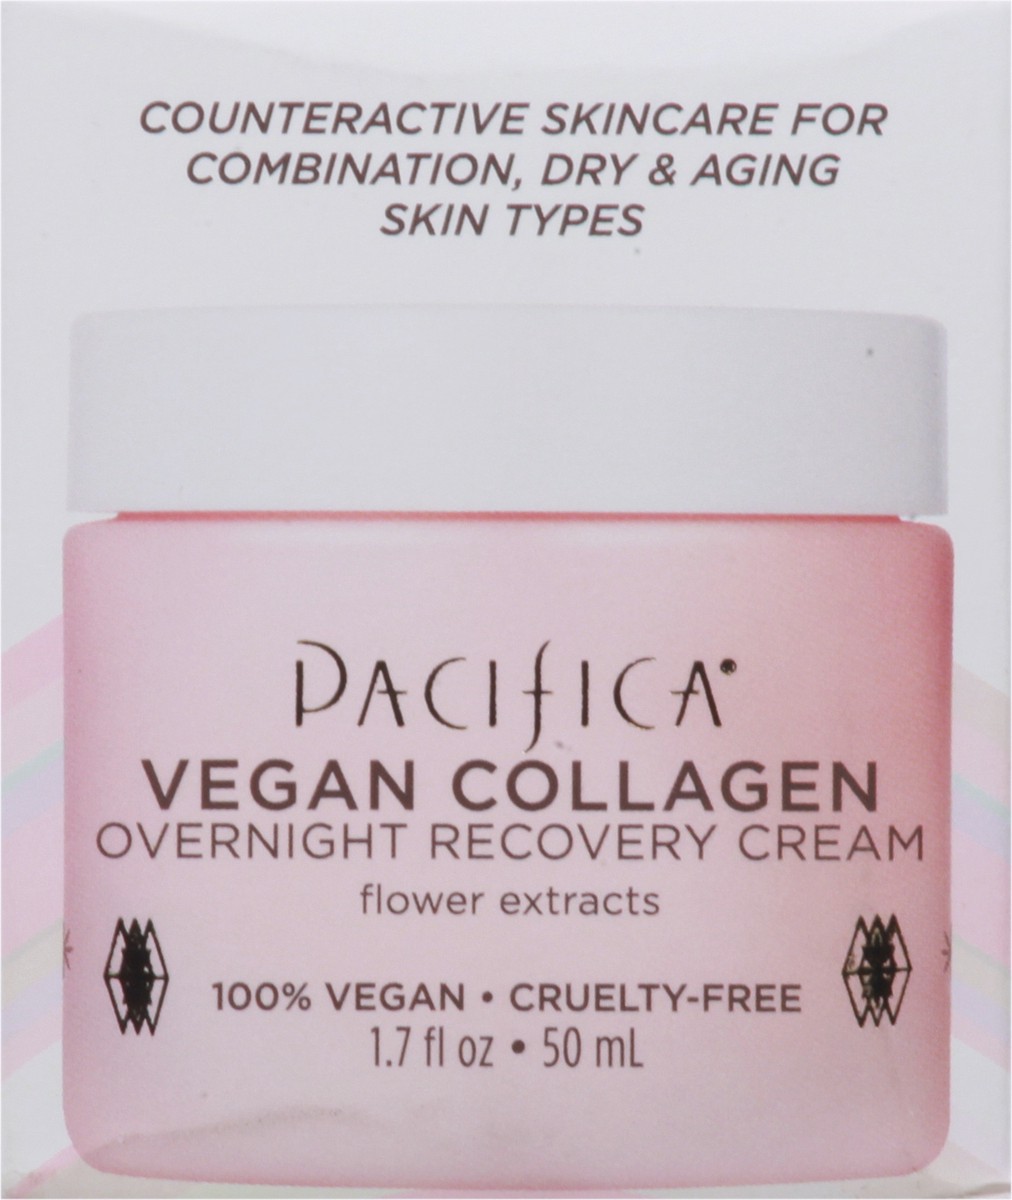 slide 7 of 9, Pacifica Vegan Collagen Overnight Recovery Cream 1.7 fl oz, 1.7 fl oz